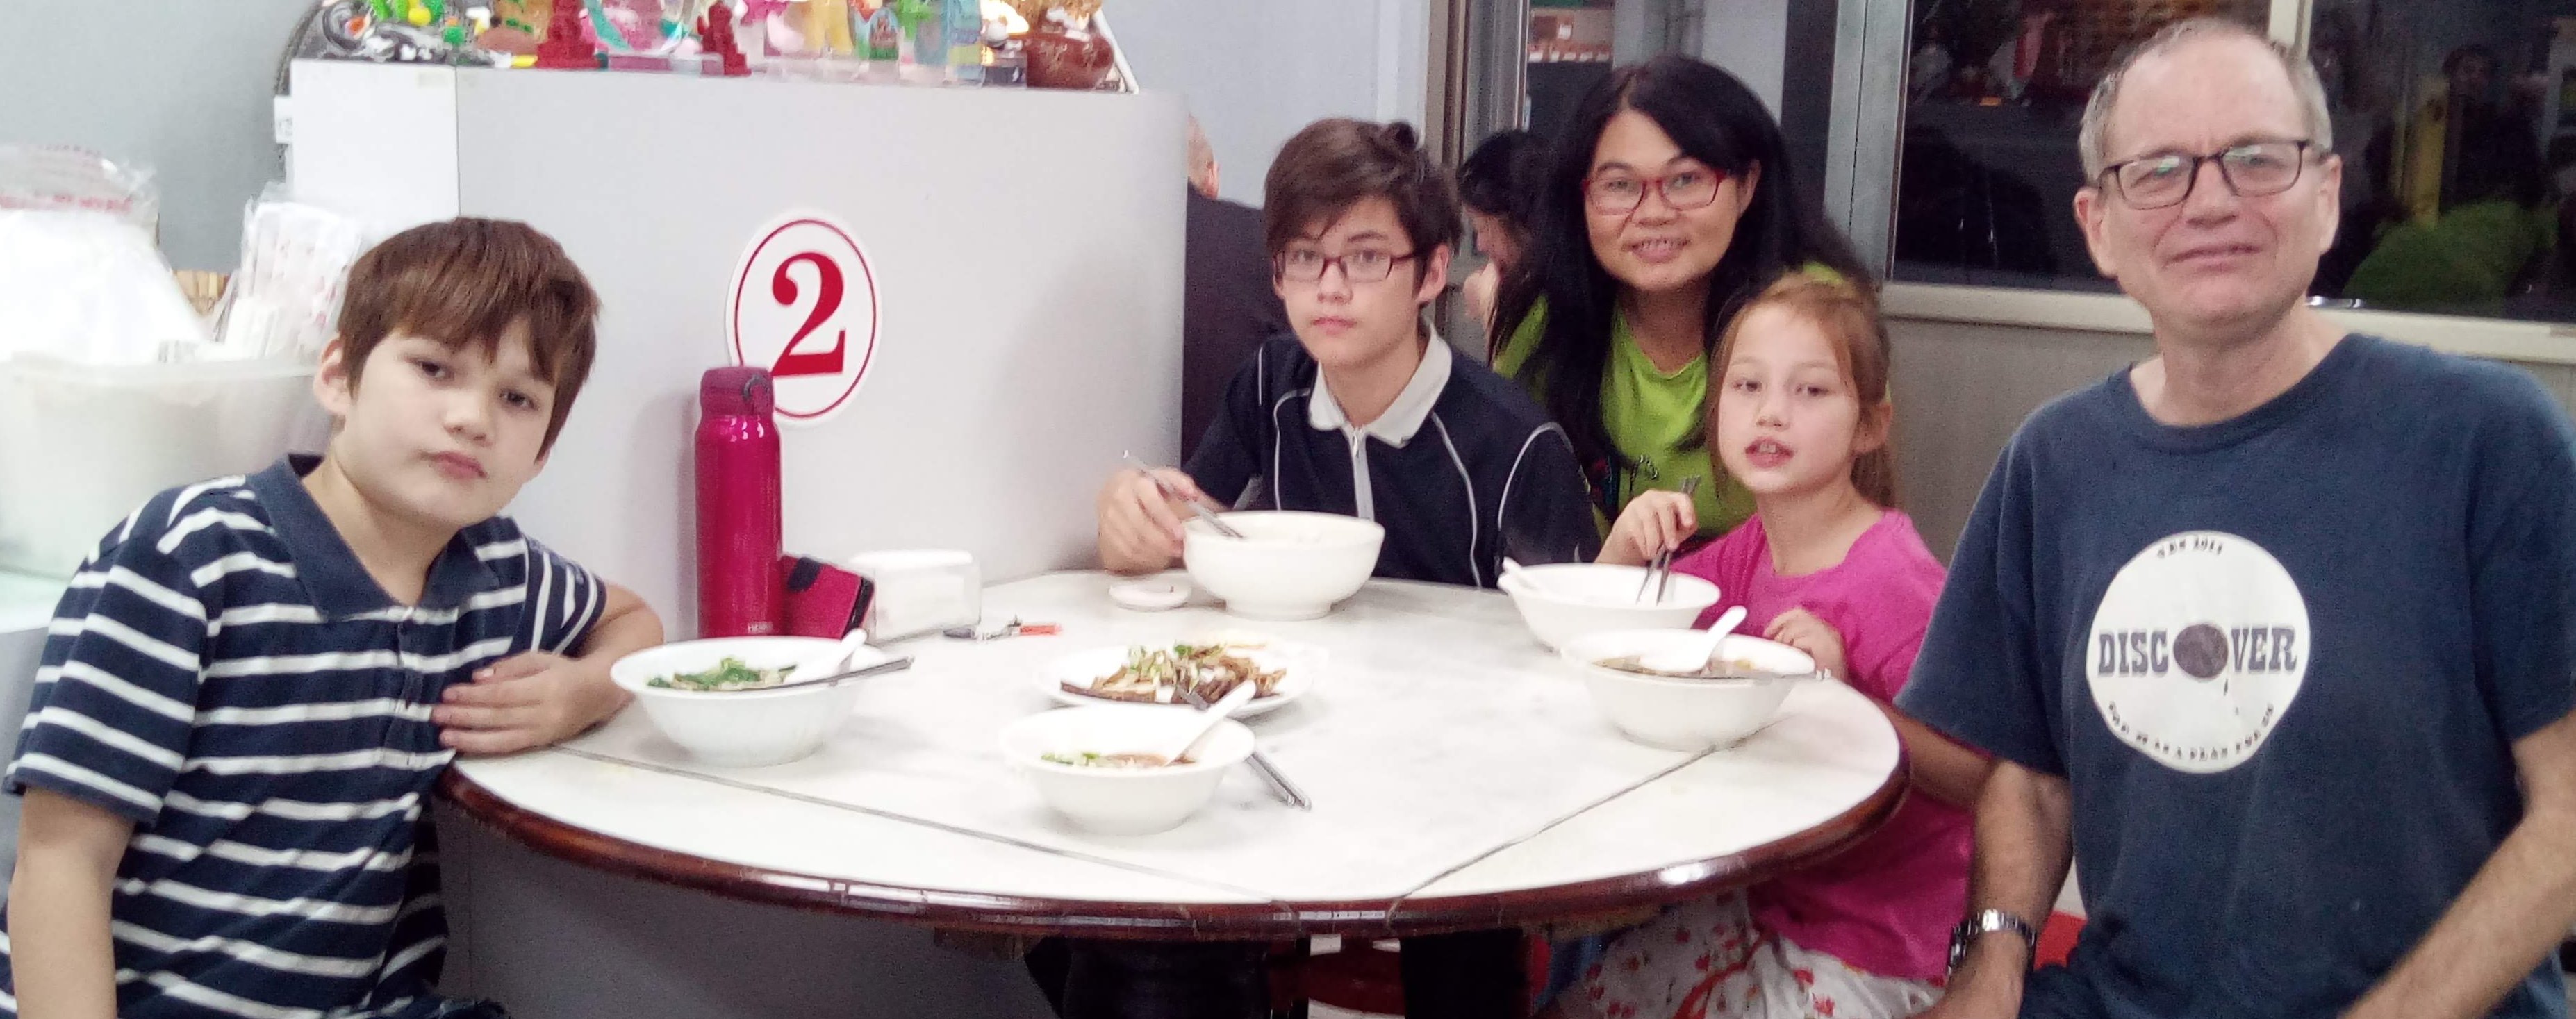 Family at Beef Noodle Restaurent